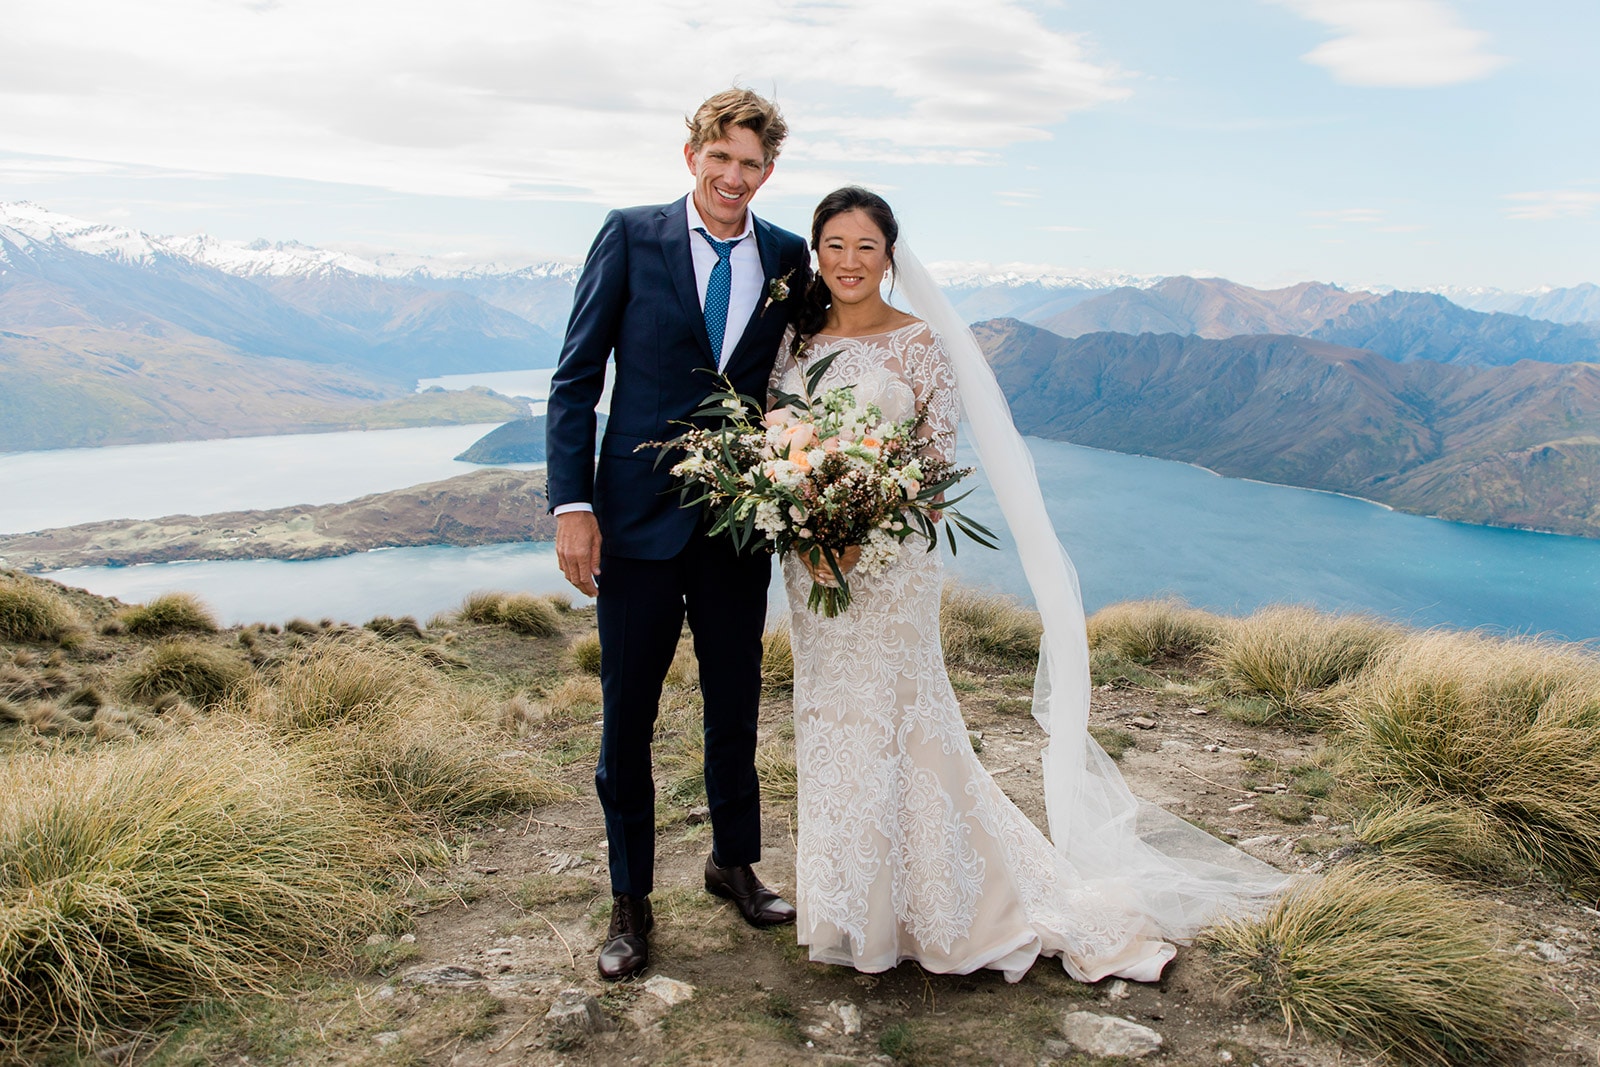 Destination Wedding with Helicopter in New Zealand on Coromandel Peak